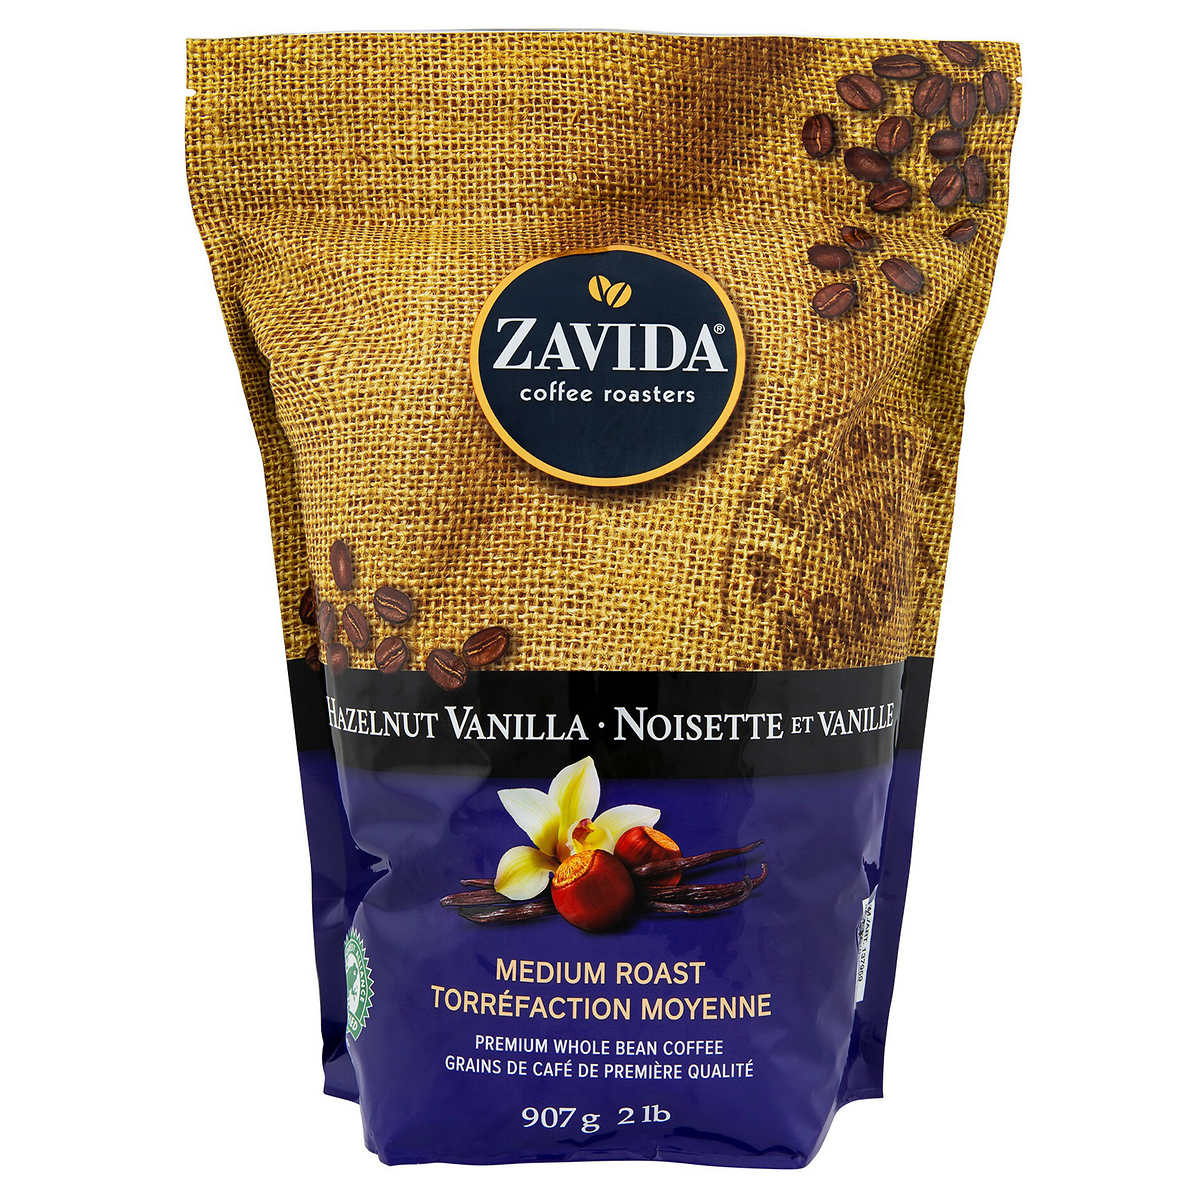 Zavida Hazelnut Vanilla Premium Whole Bean Coffee 907g